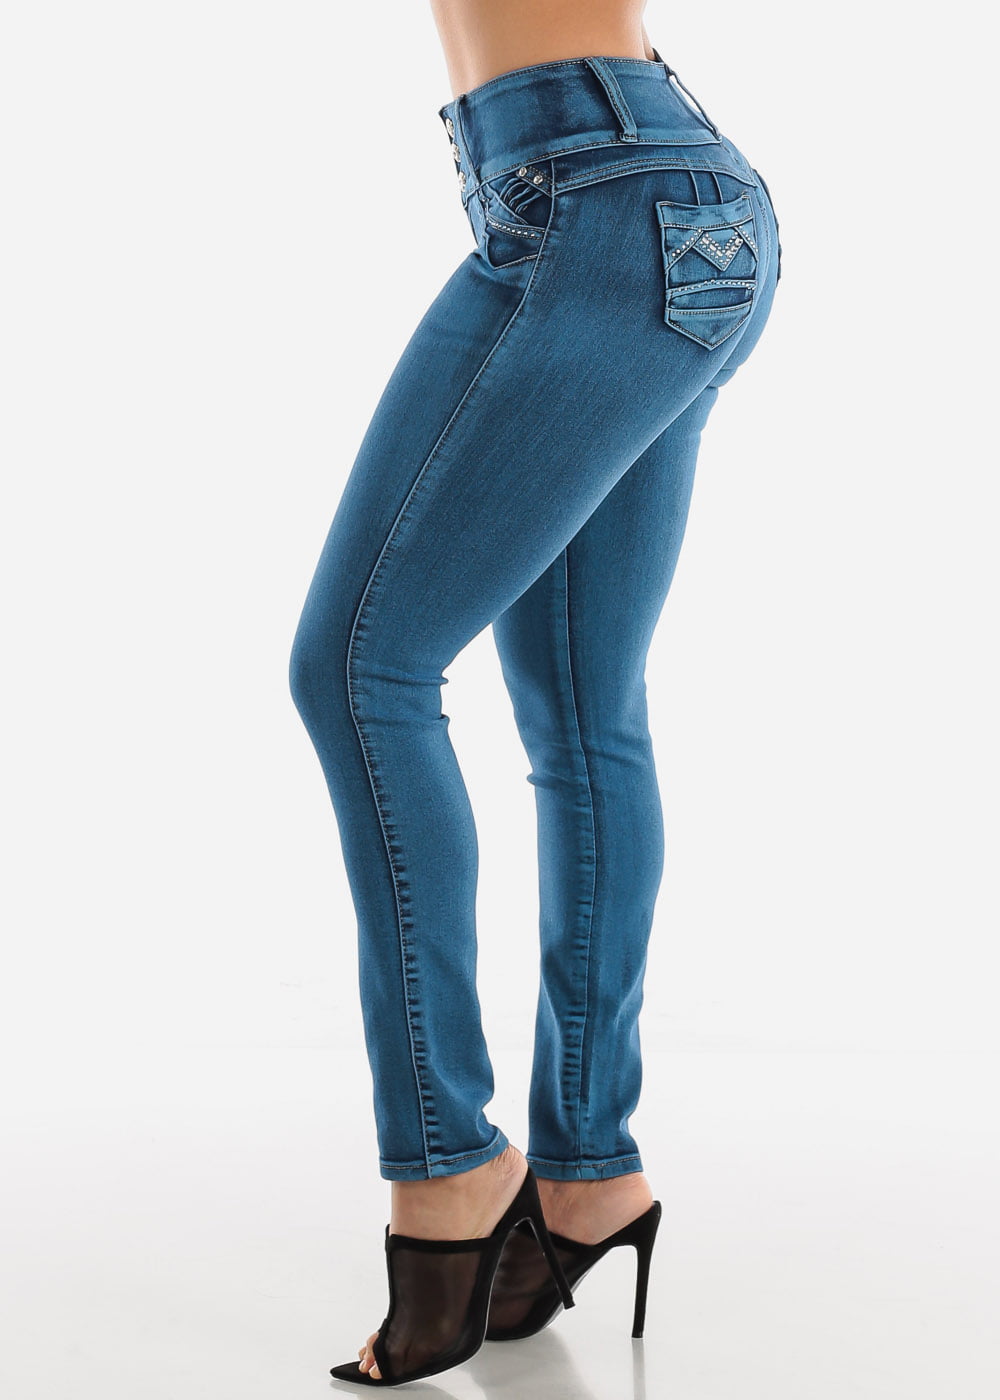 Moda Xpress - Womens Skinny Jeans BUTT LIFTING Mid Rise Levanta 